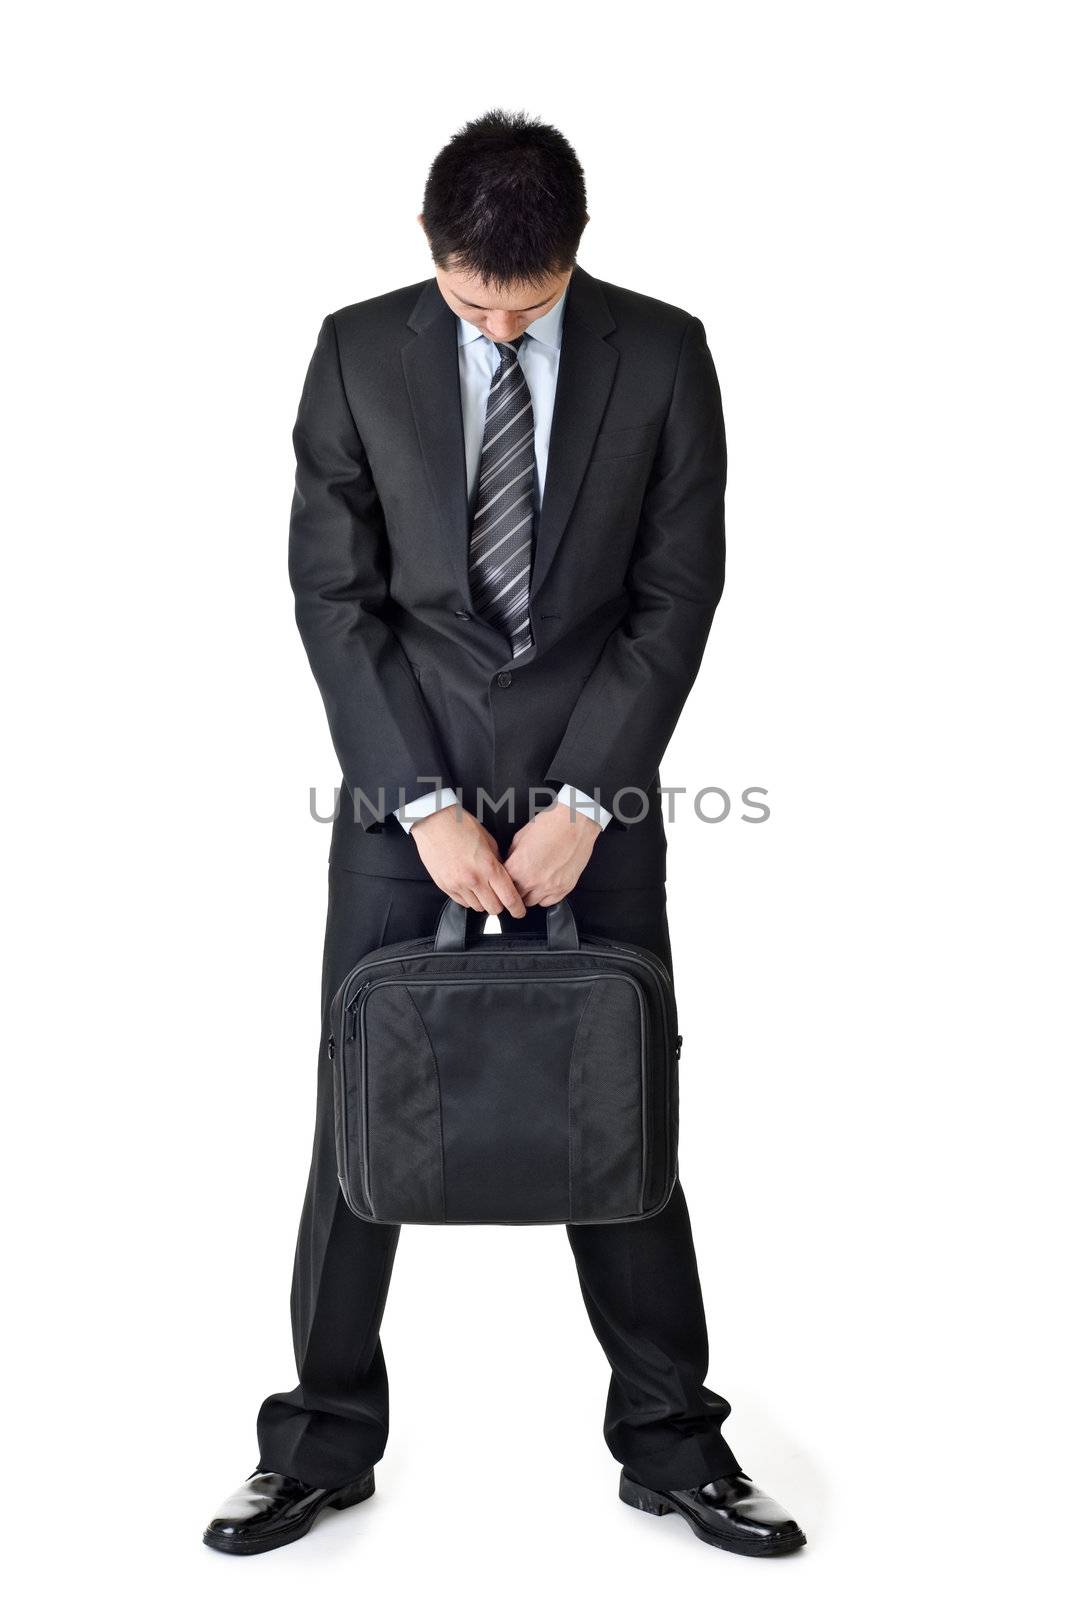 Sad business man, full length portrait isolated white background.